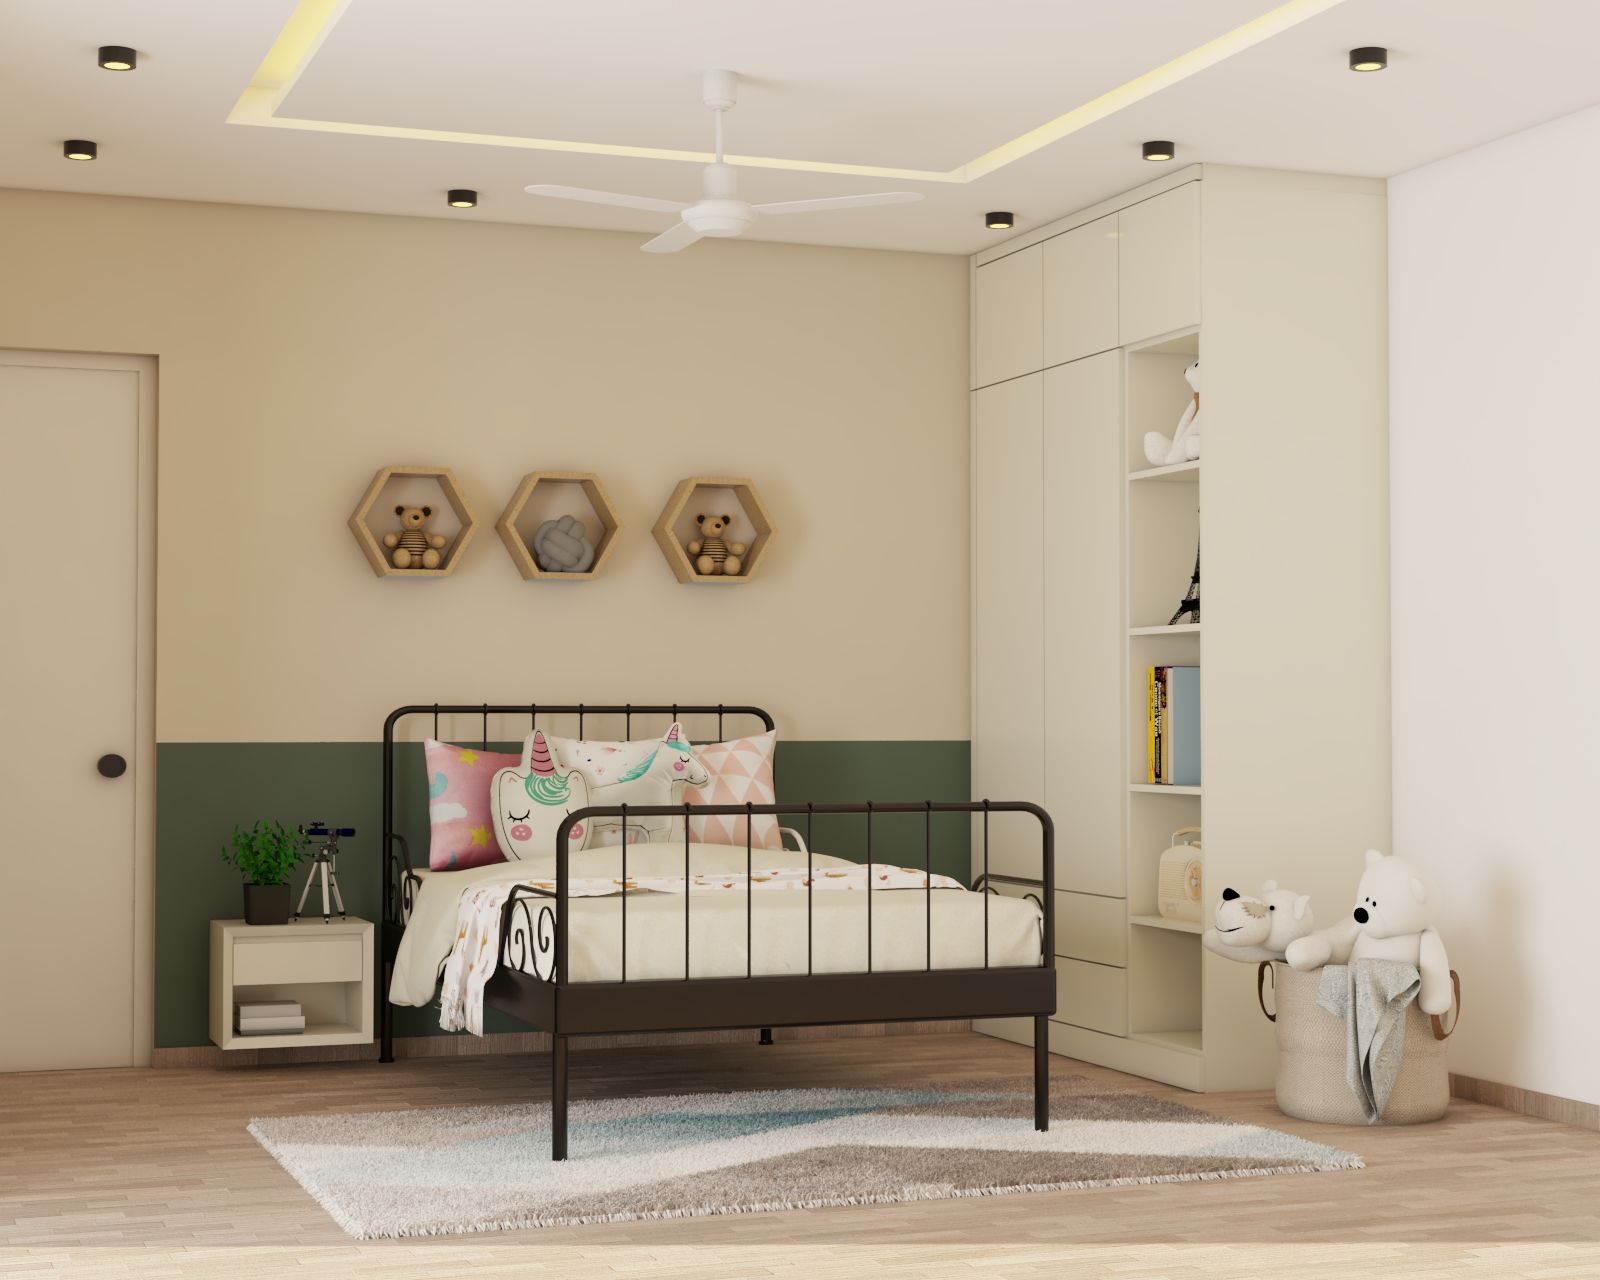 Peripheral False Ceiling Design For Modern Bedrooms